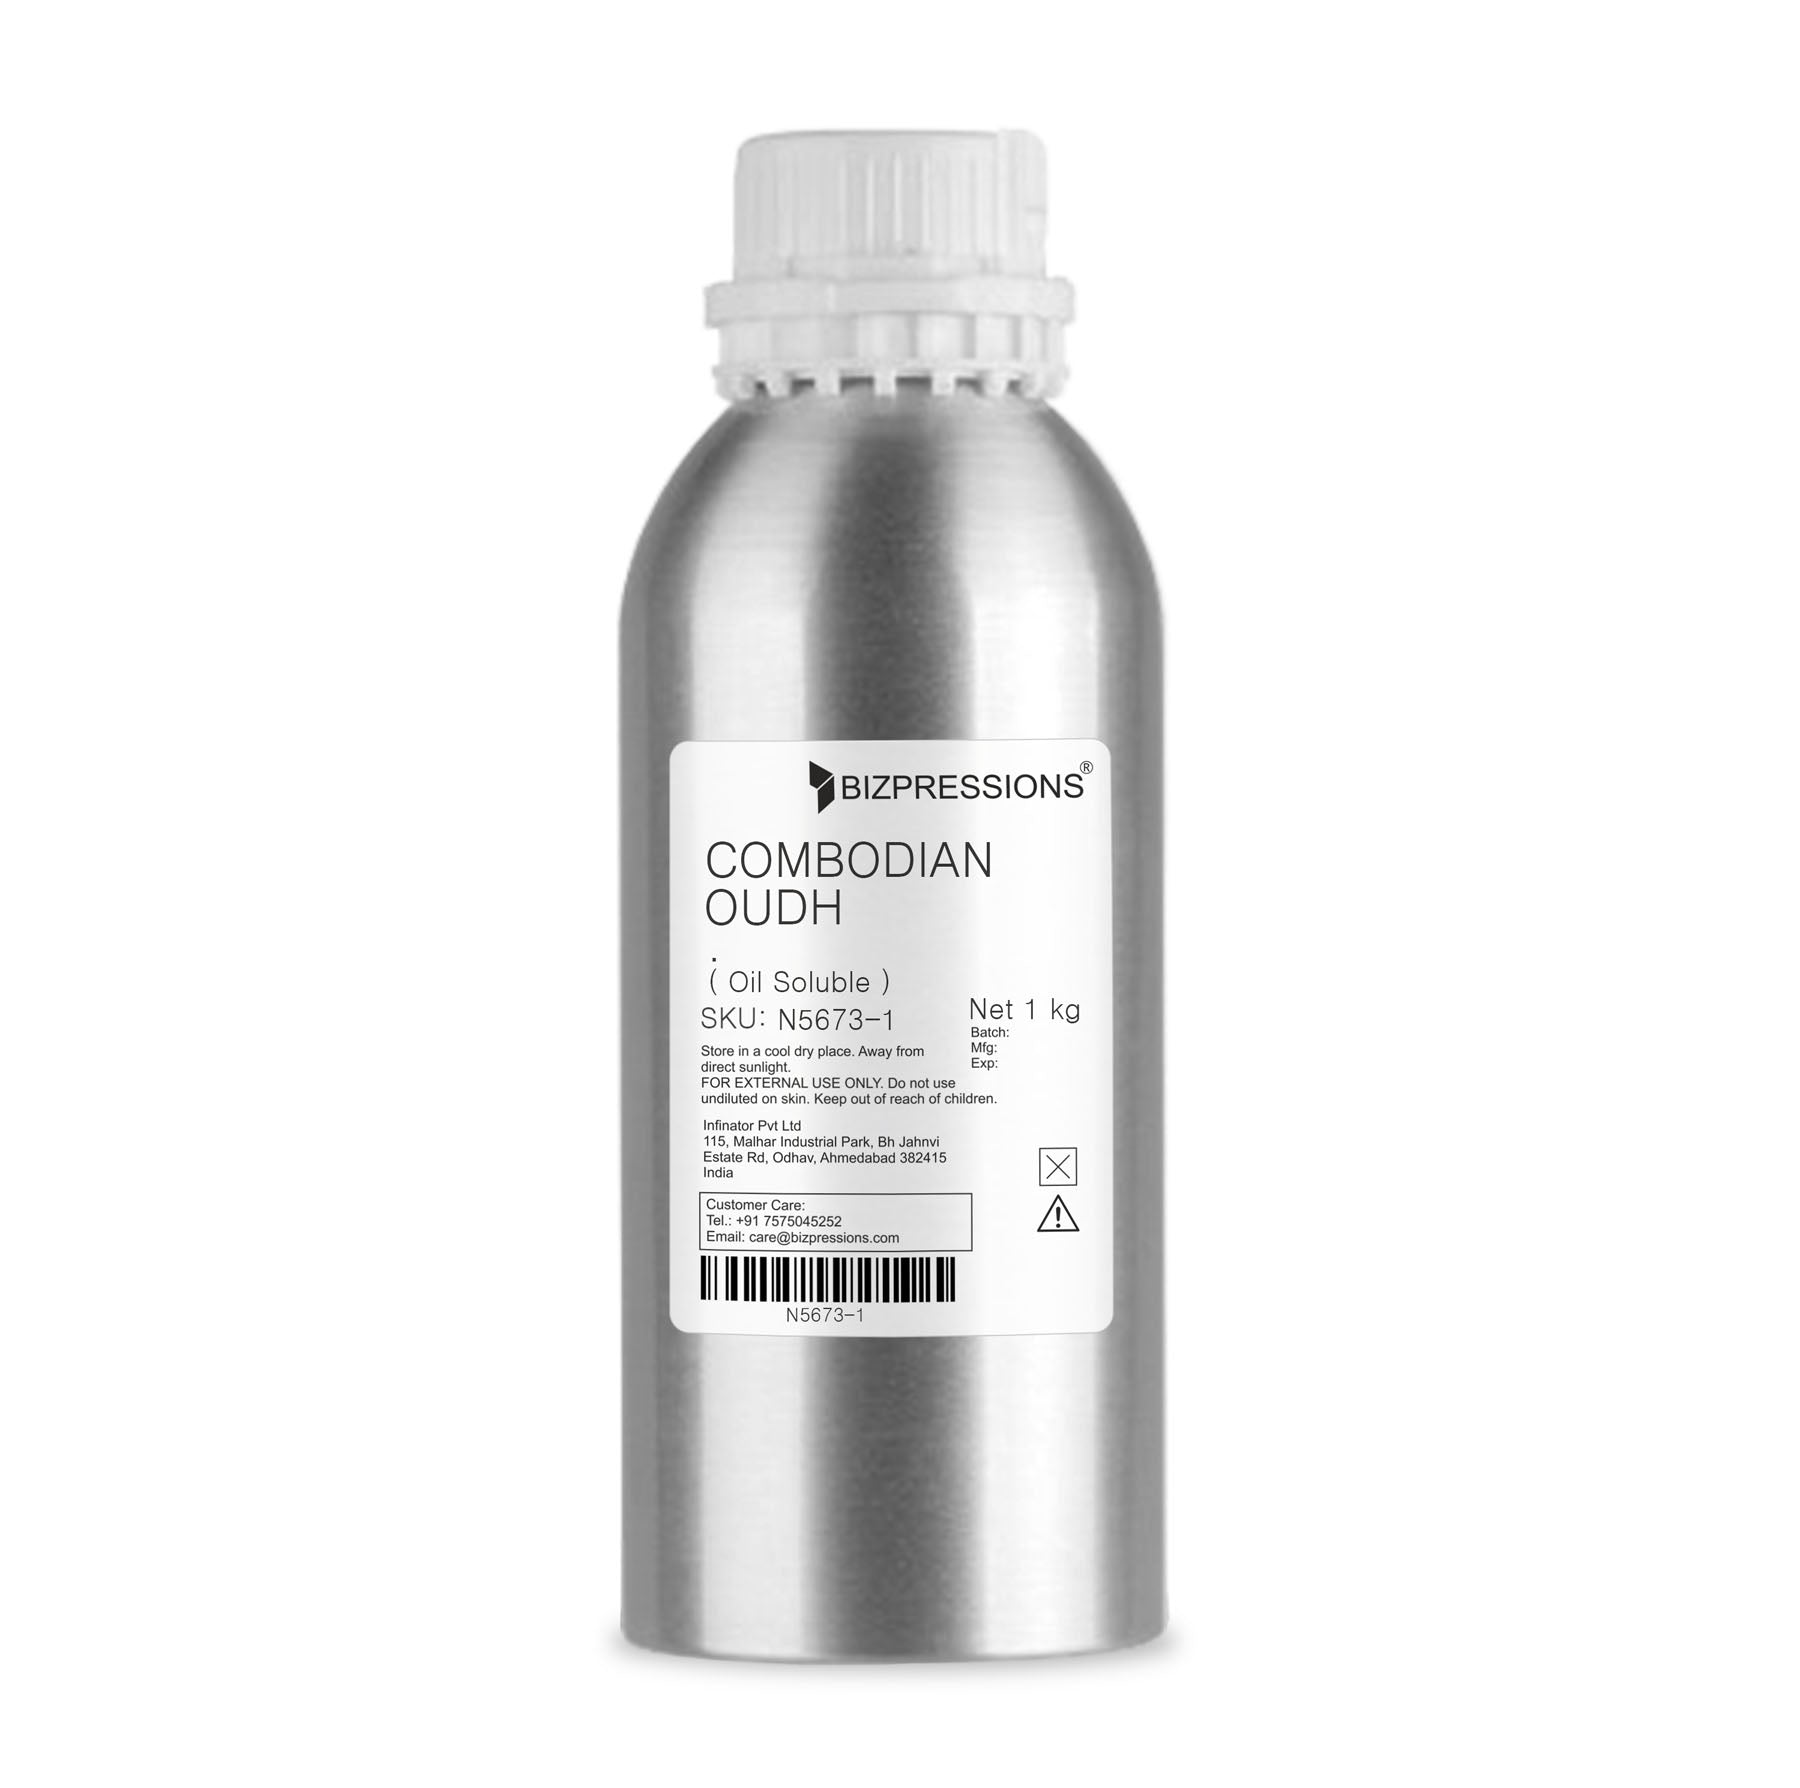 COMBODIAN OUDH - Fragrance ( Oil Soluble ) - 1 kg